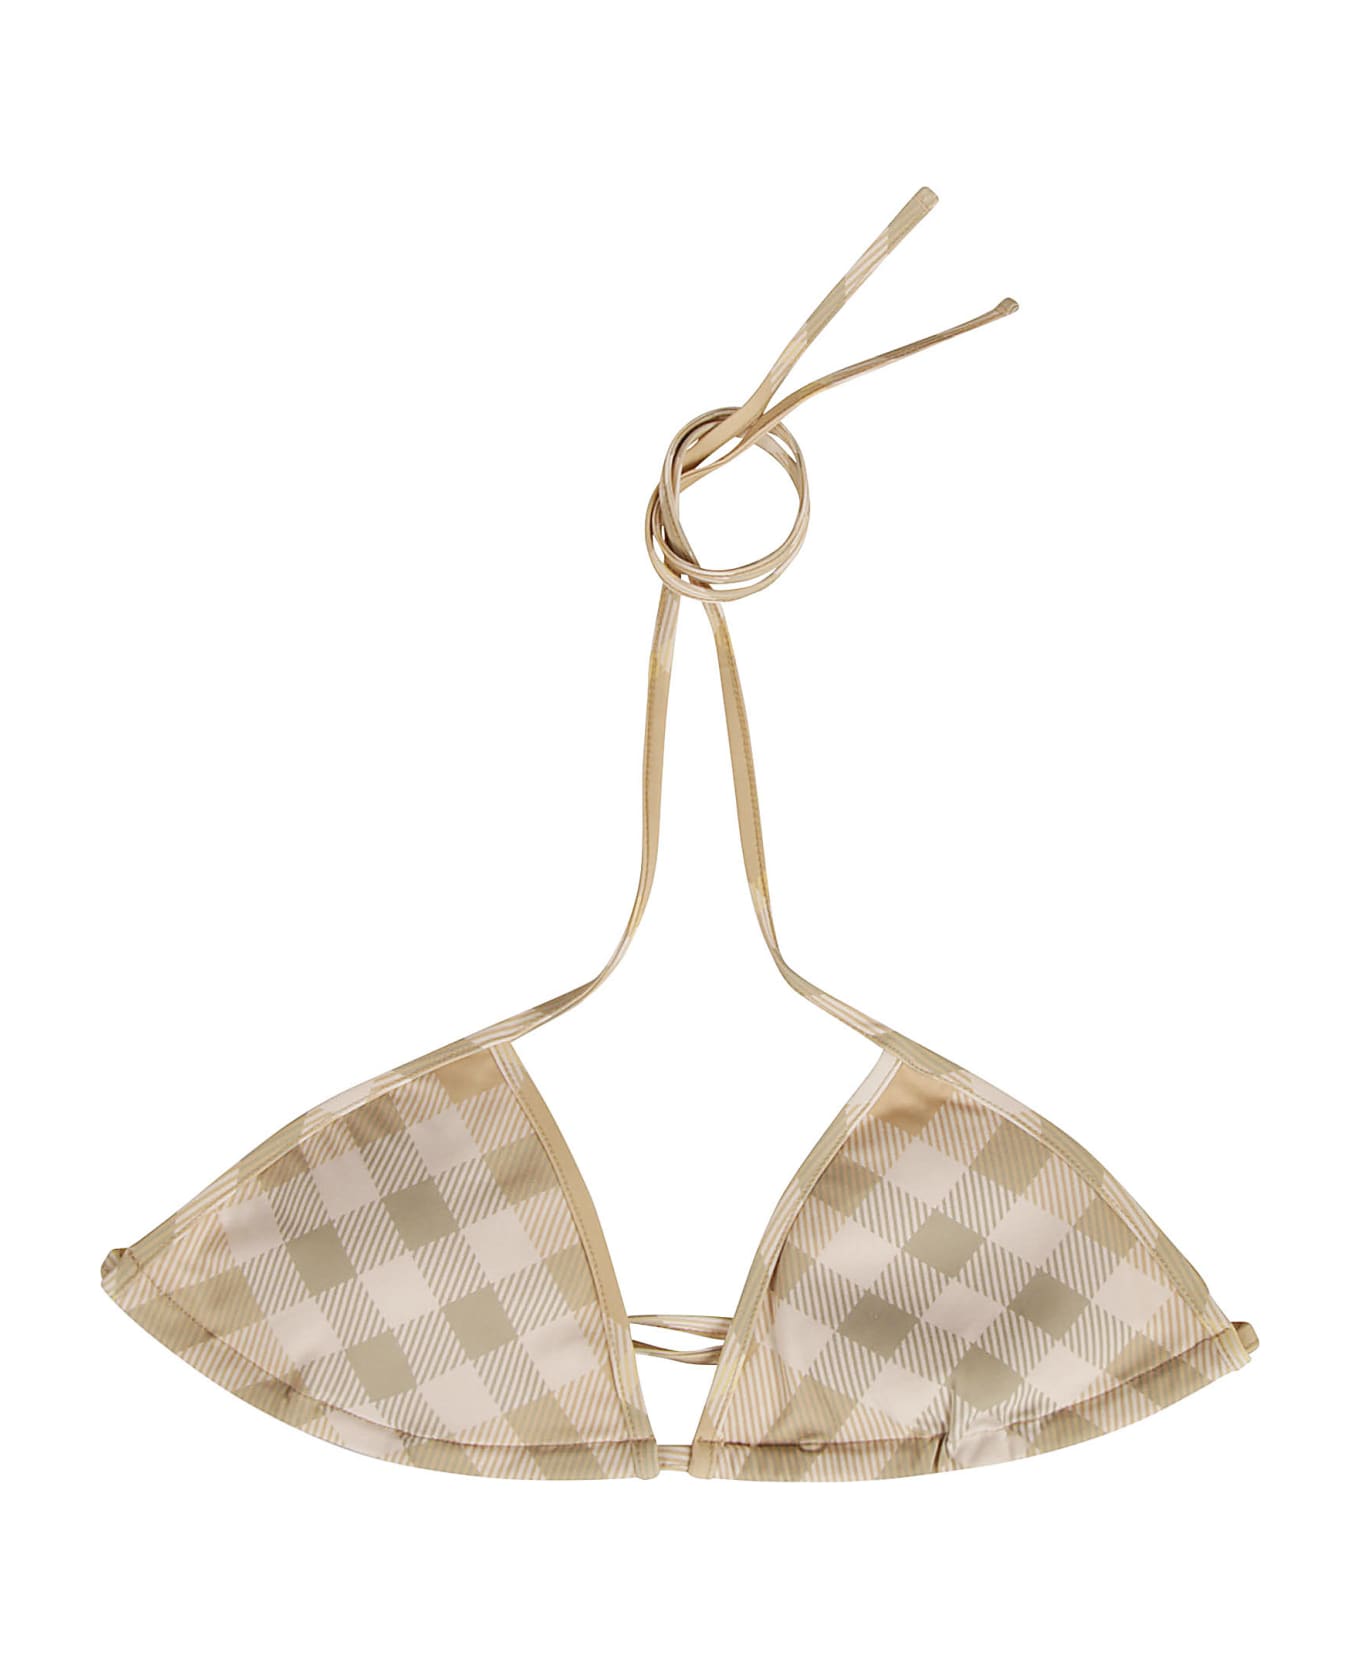 Burberry Check Patterned Bikini Tops - Flax IP Check